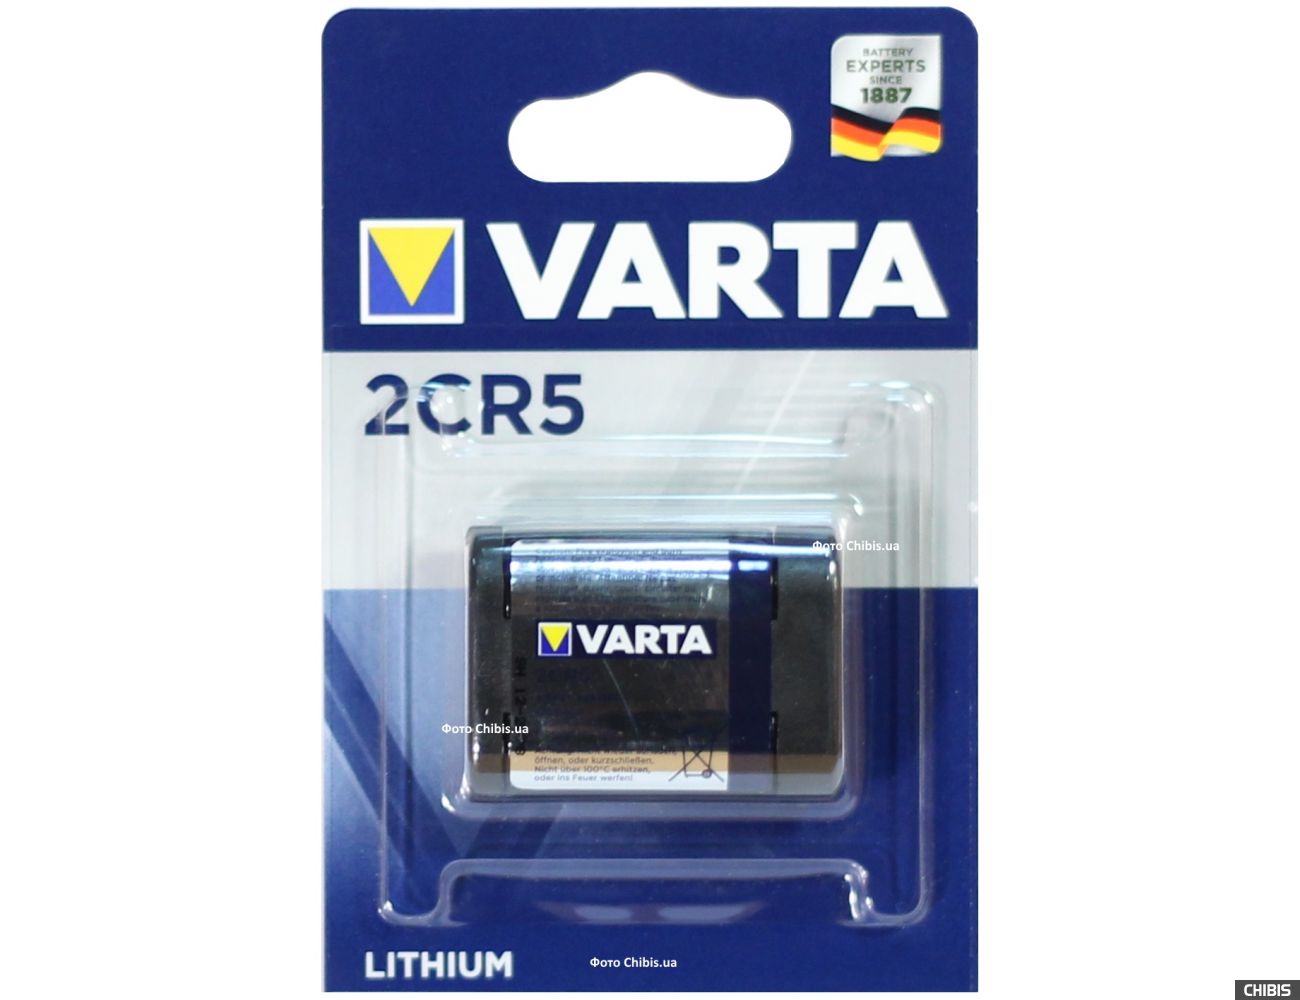 Батарейка 2CR5 Varta 6V Литиевая 1 шт. (c 2018 года)